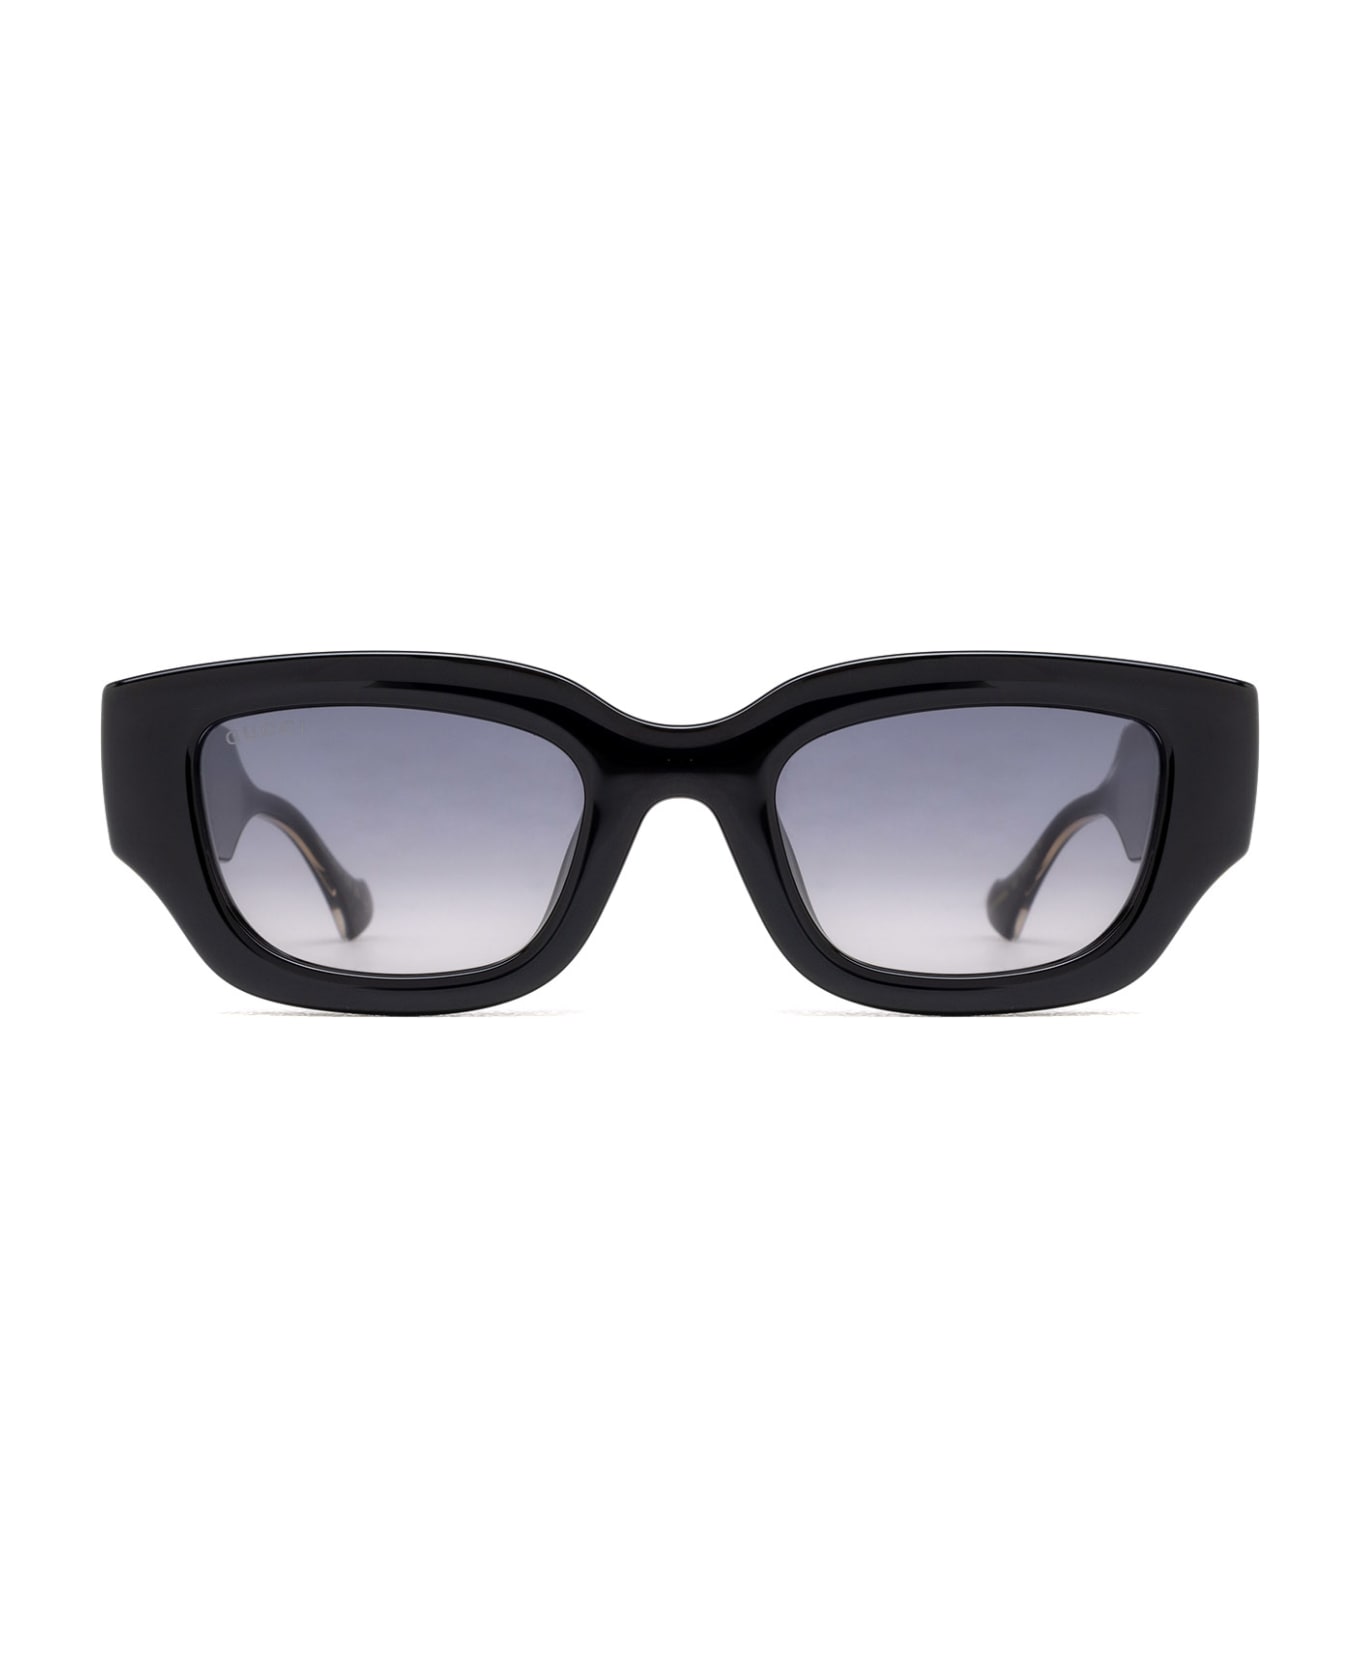 Gucci Eyewear Gg1558sk Black Sunglasses - Black サングラス